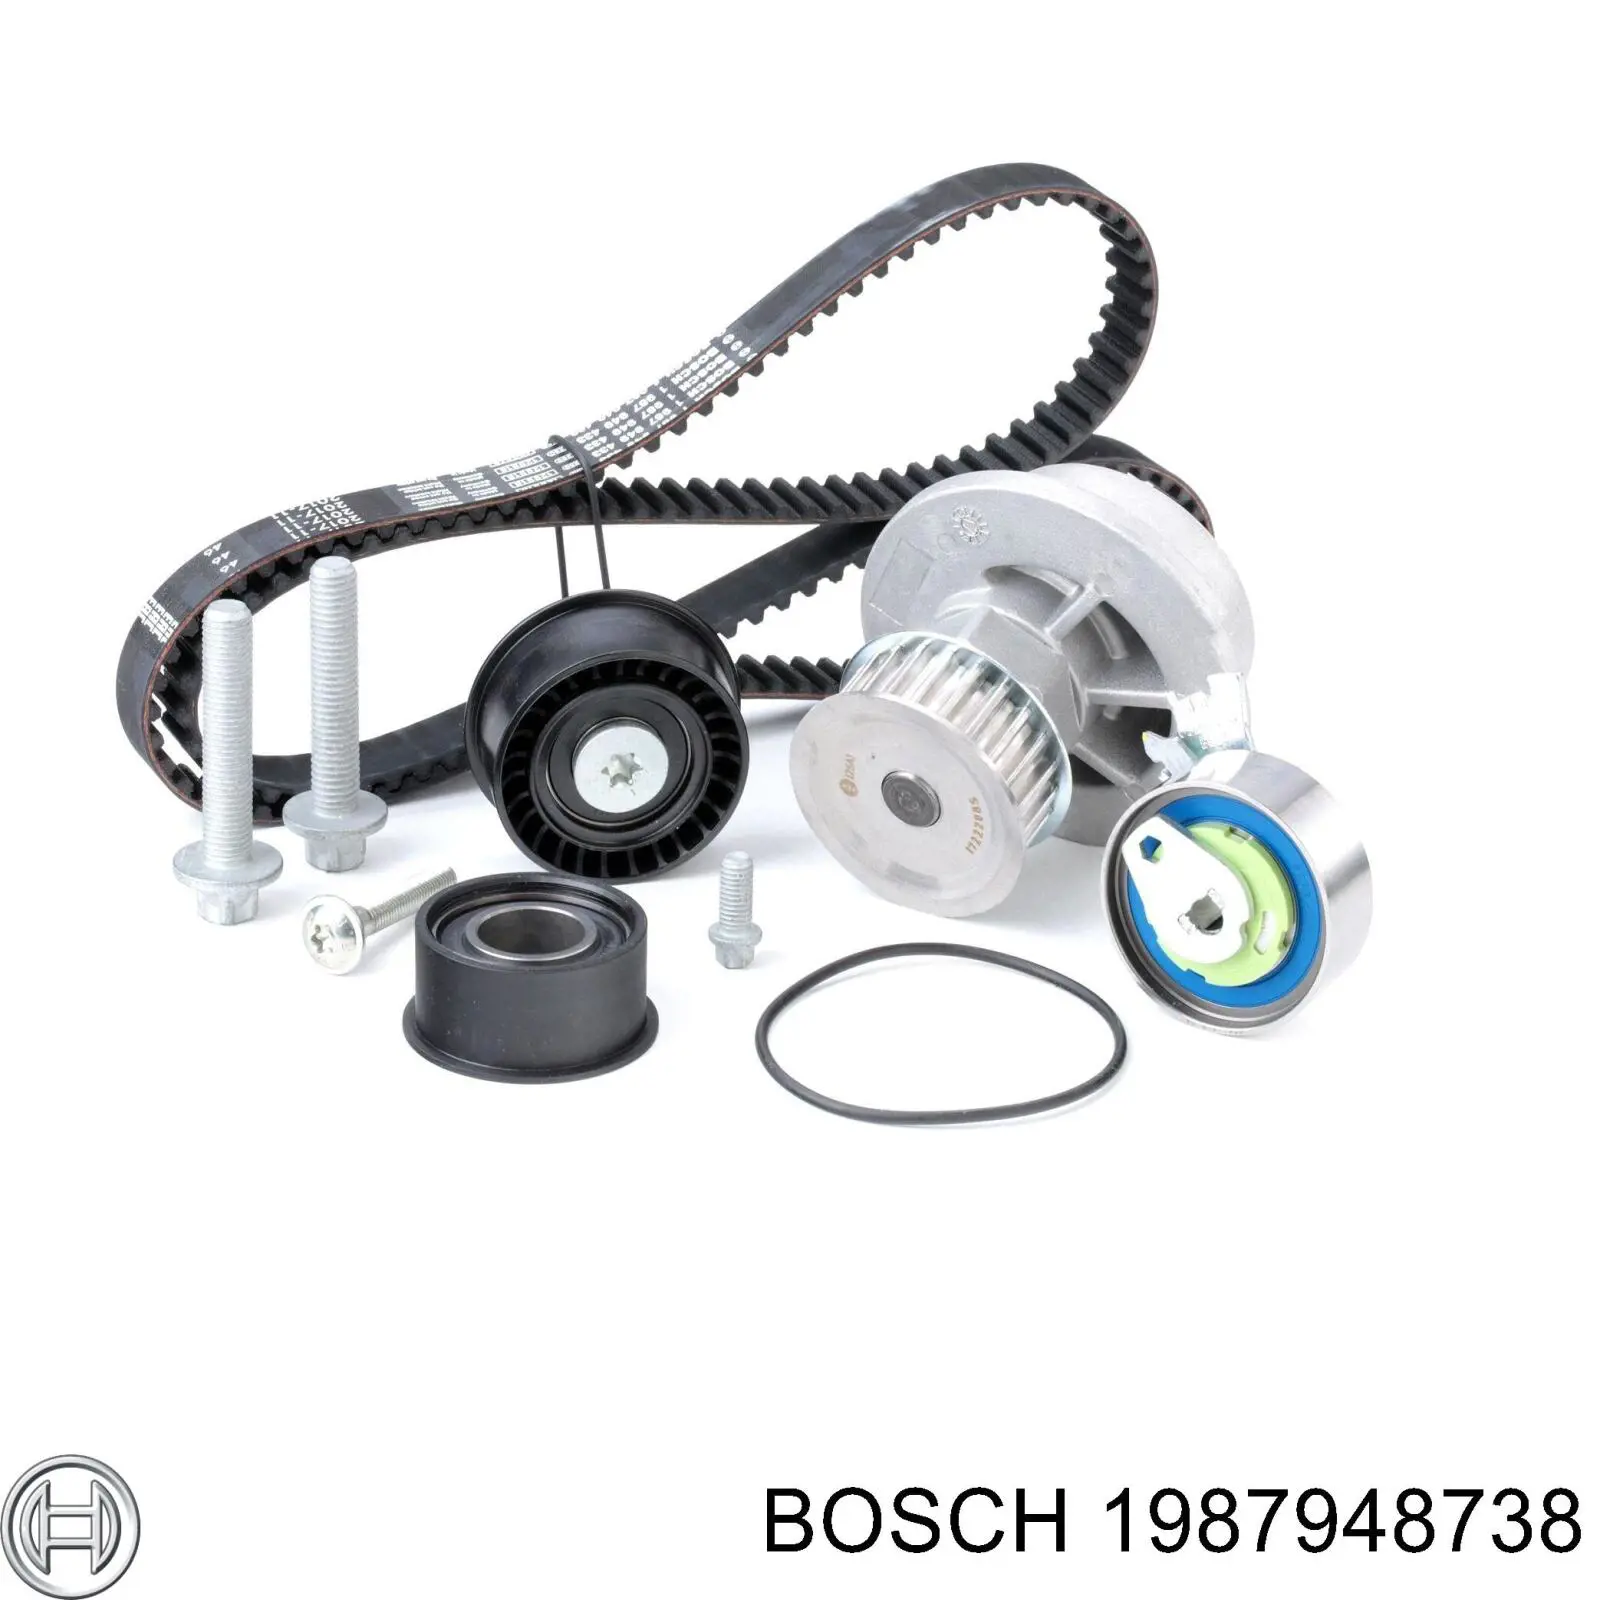 1987948738 Bosch kit de correa de distribución